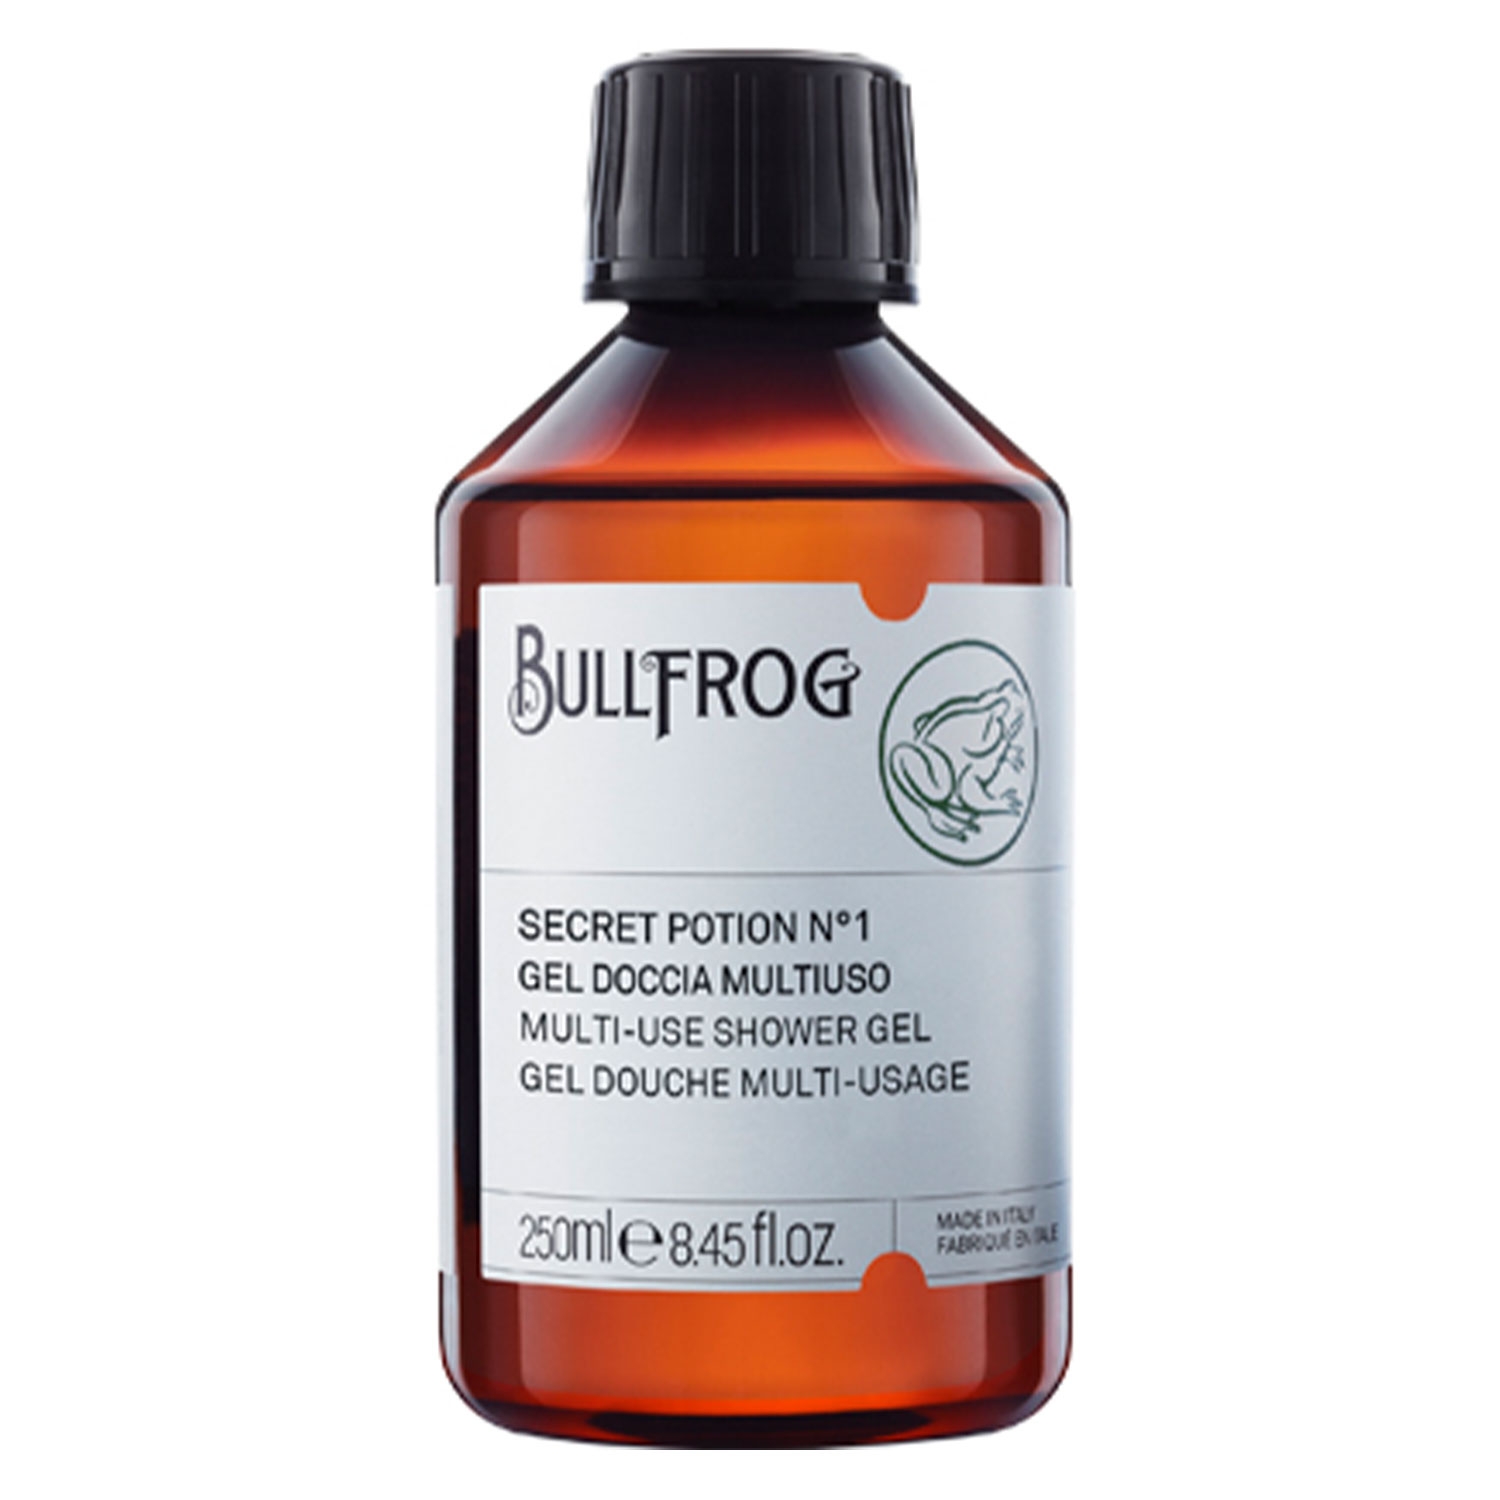 Product image from BULLFROG - Multi-Use Shower Gel Secret Potion N°1